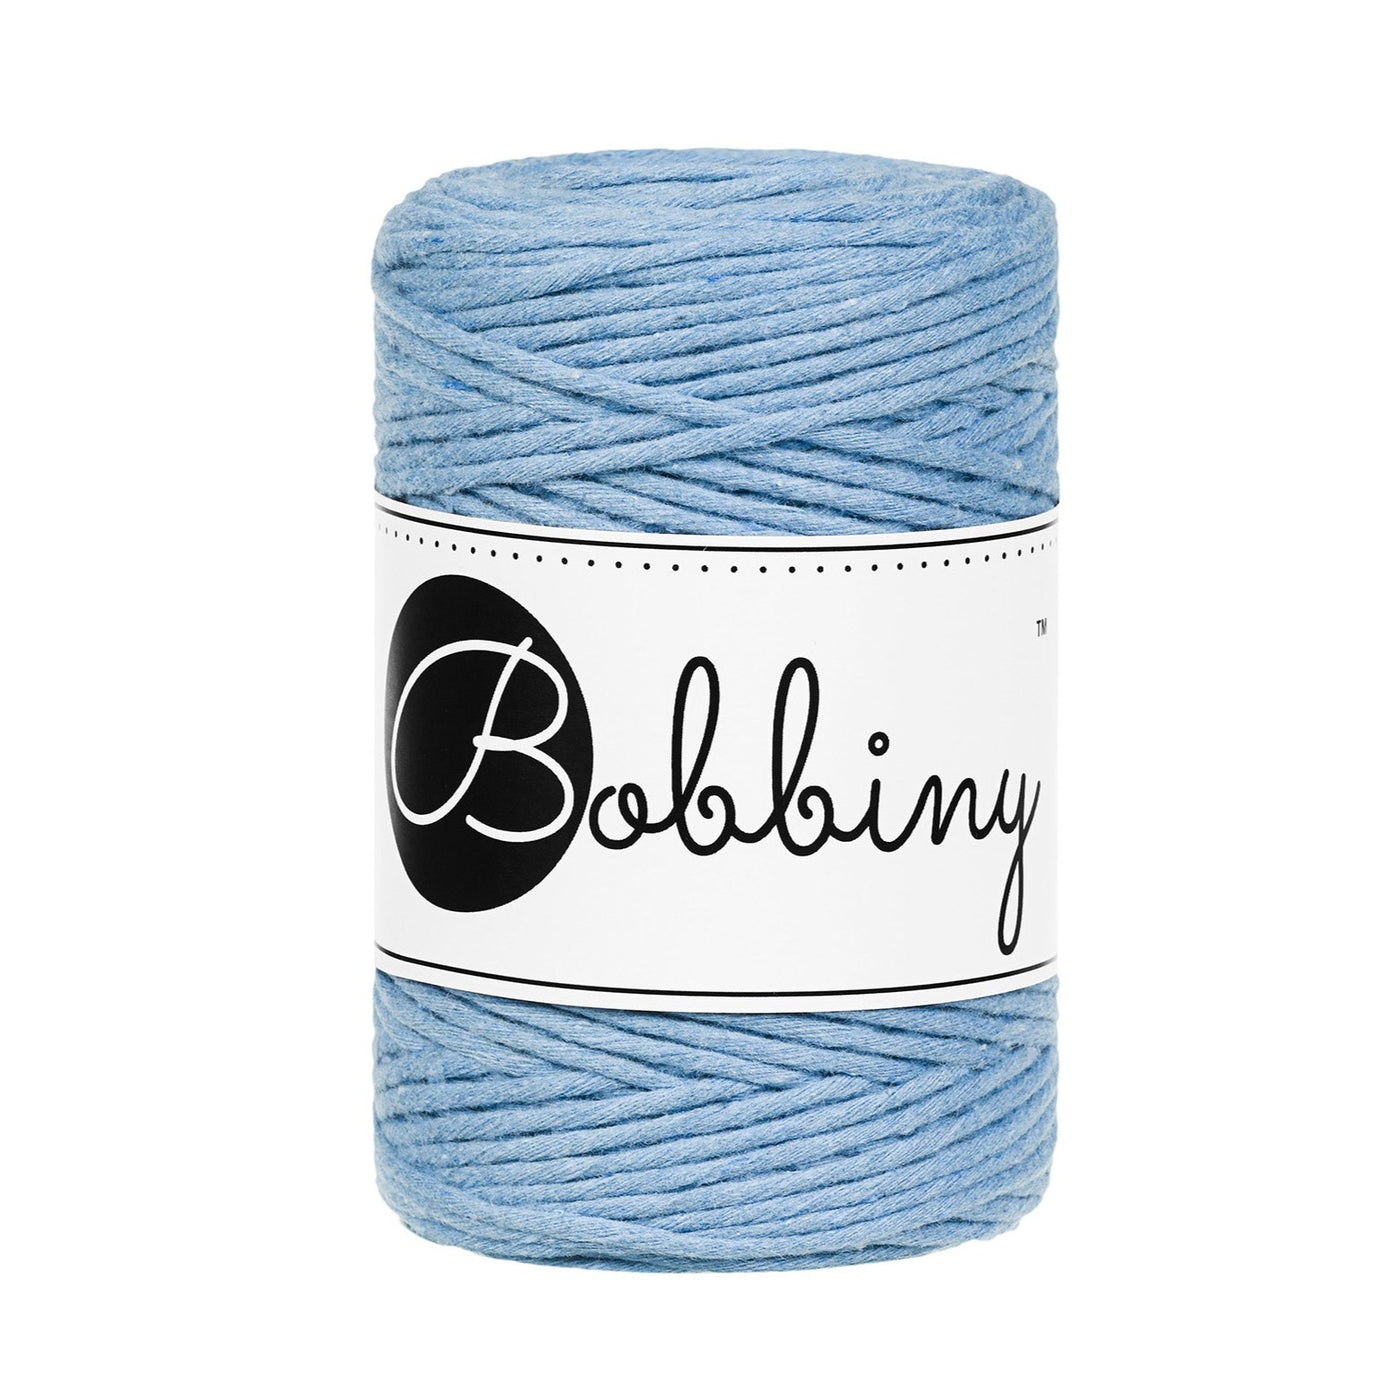 Bobbiny single twist macrame cord in perfect blue shade